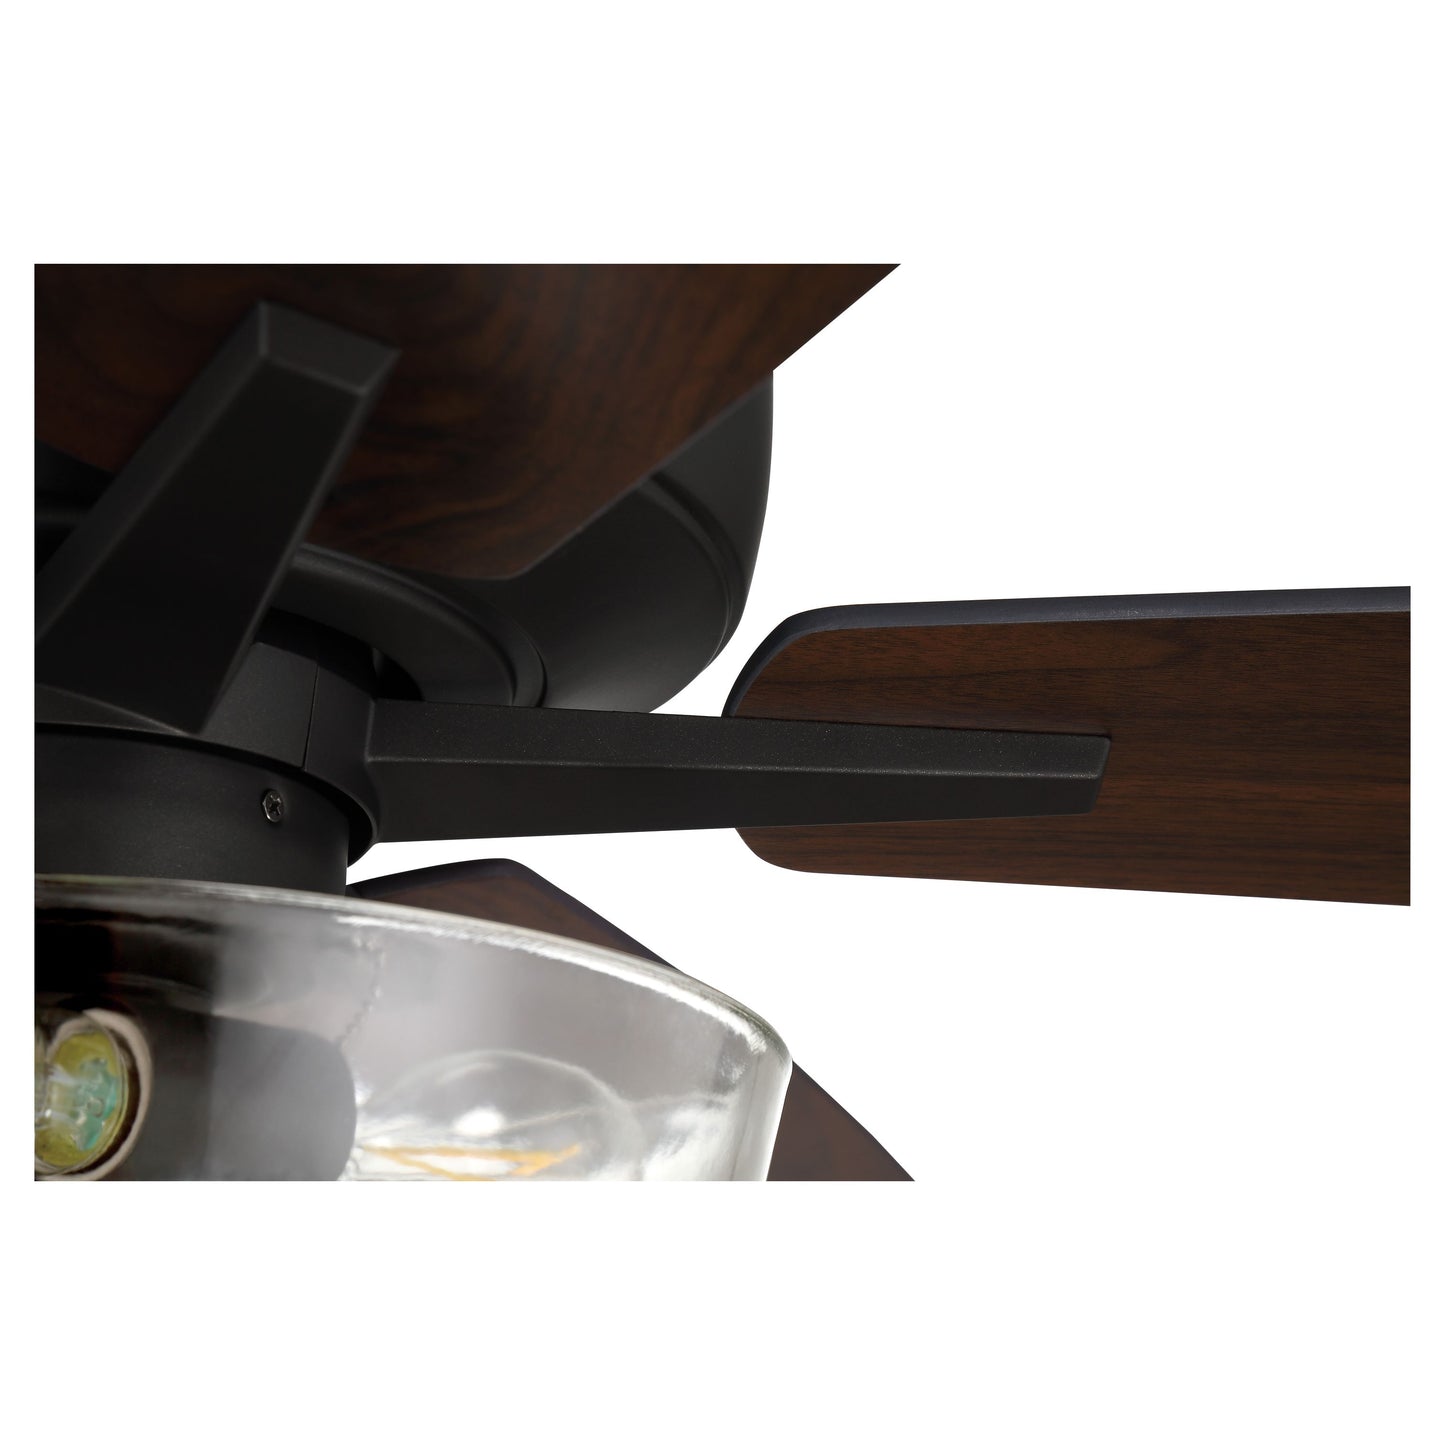 S101ESP5-60ESPWLN - Super Pro 101 60" 5 Blade Ceiling Fan with Light Kit - Pull Chain - Espresso